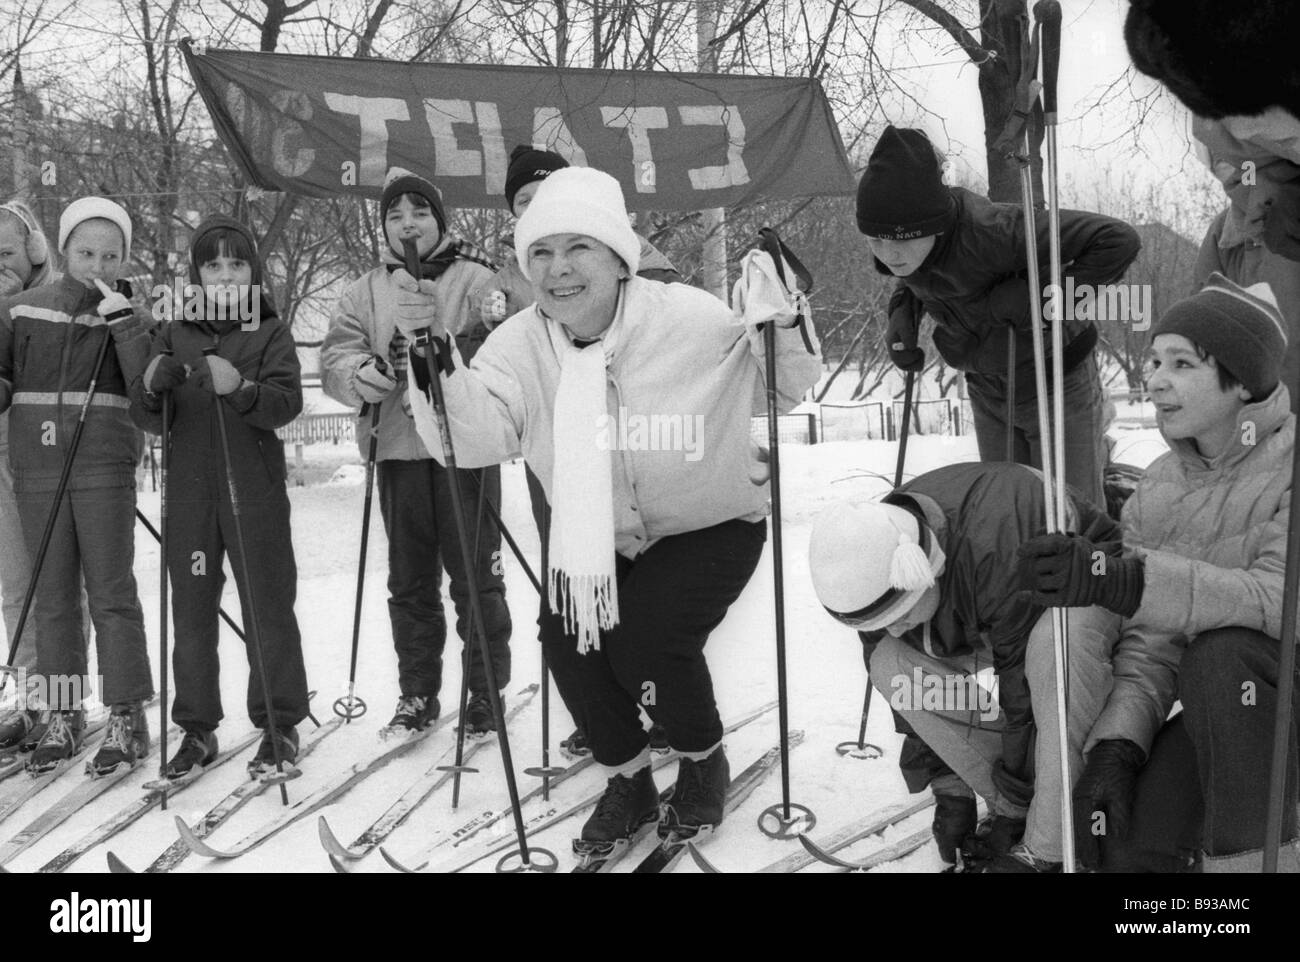 Tamara Mayorova director of secondary school No 4 taking part in ski touring together with schoolchildren Stock Photo